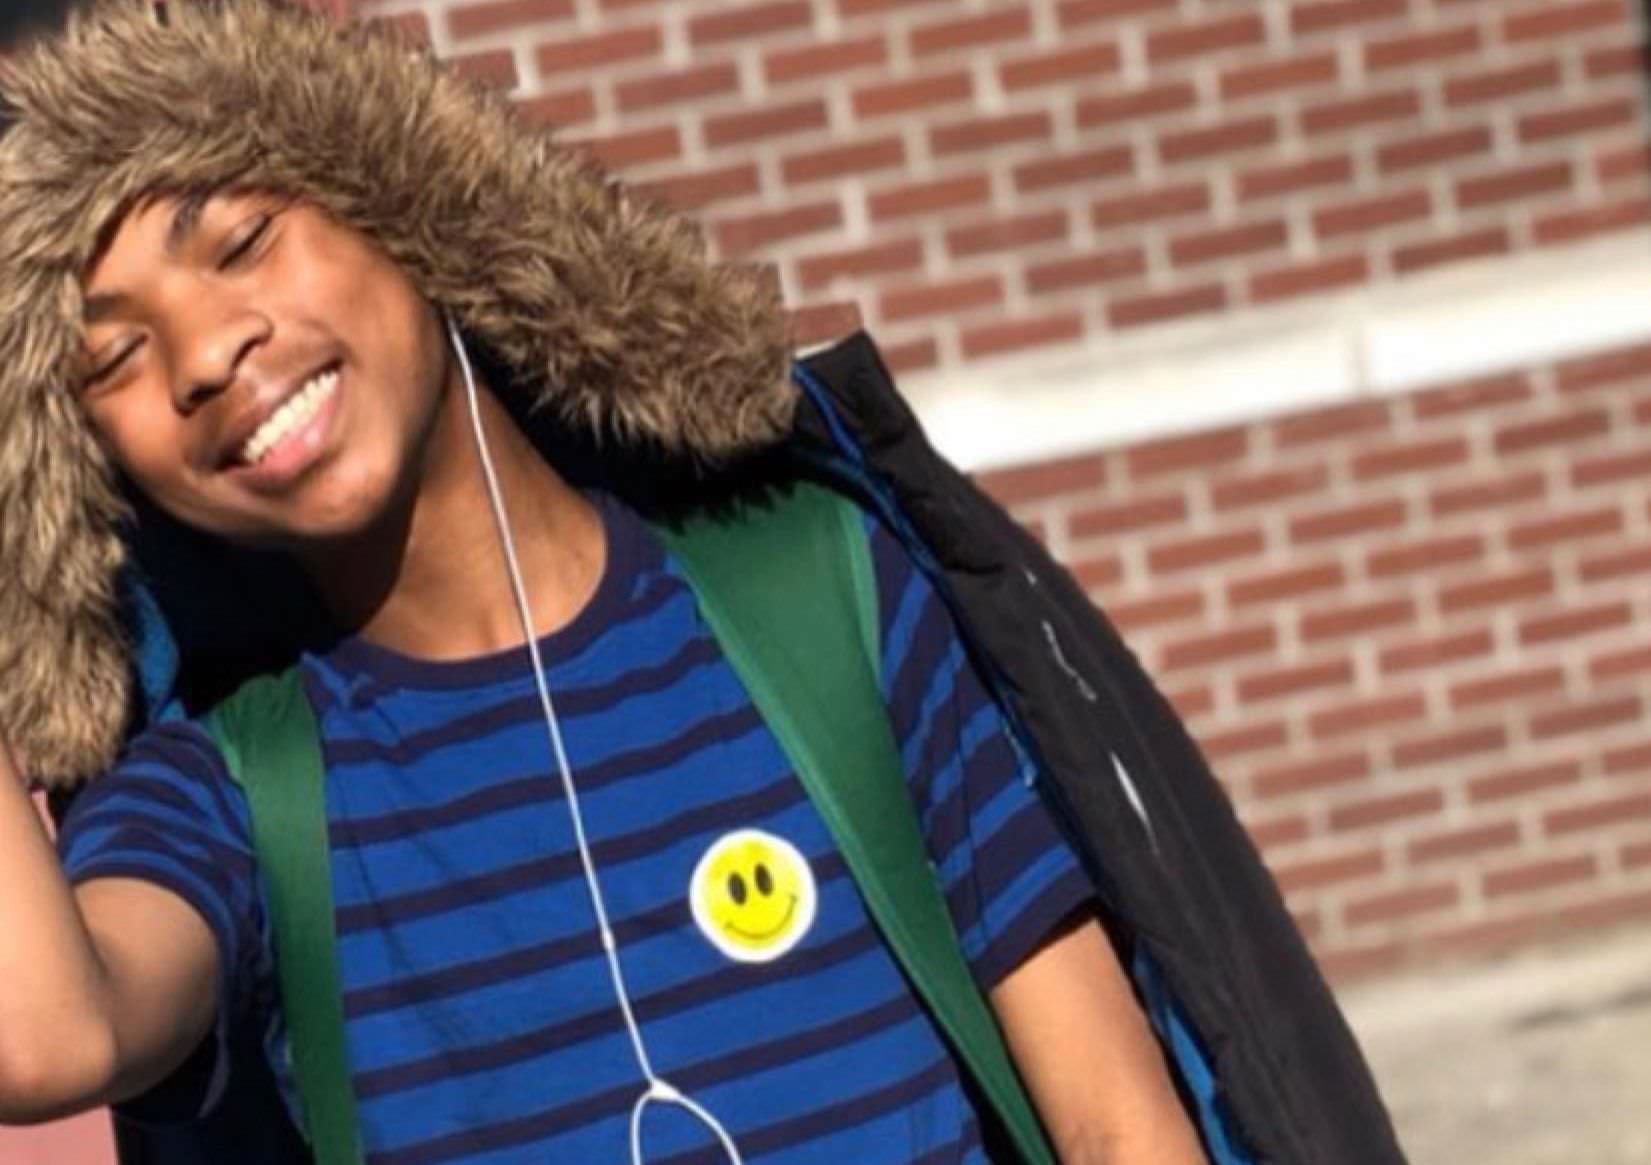 Adolescente gay se suicida após sofrer bullying e homofobia na escola